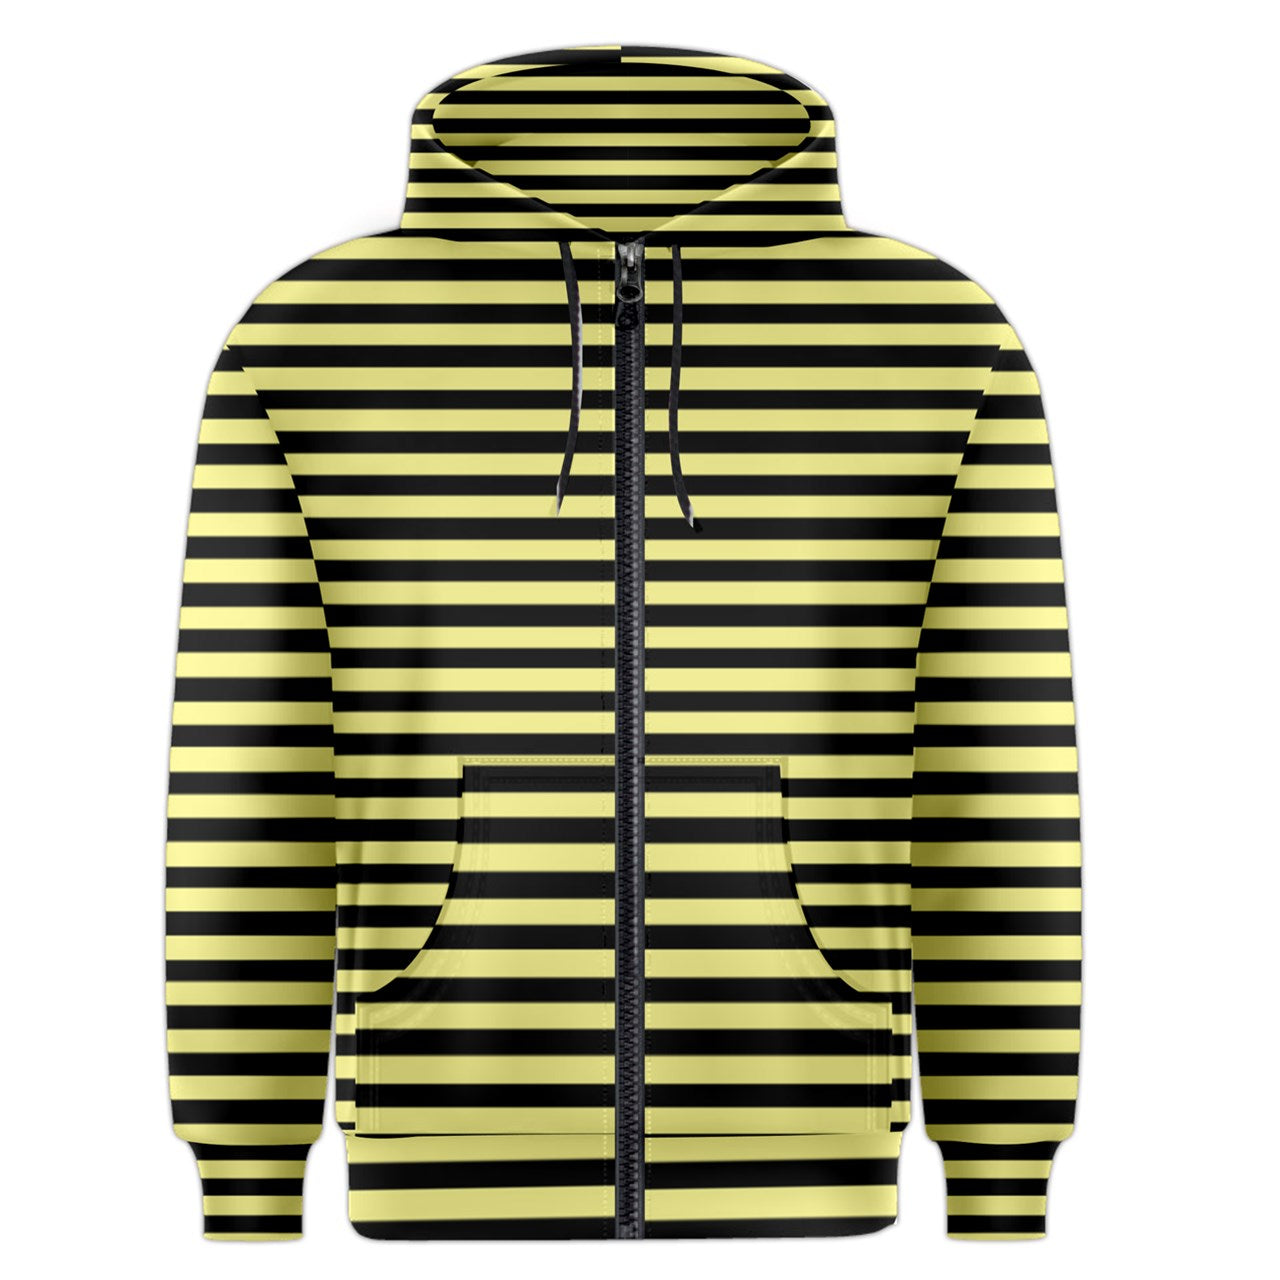 Bumblebee yellow stripe Zipper Hoodie